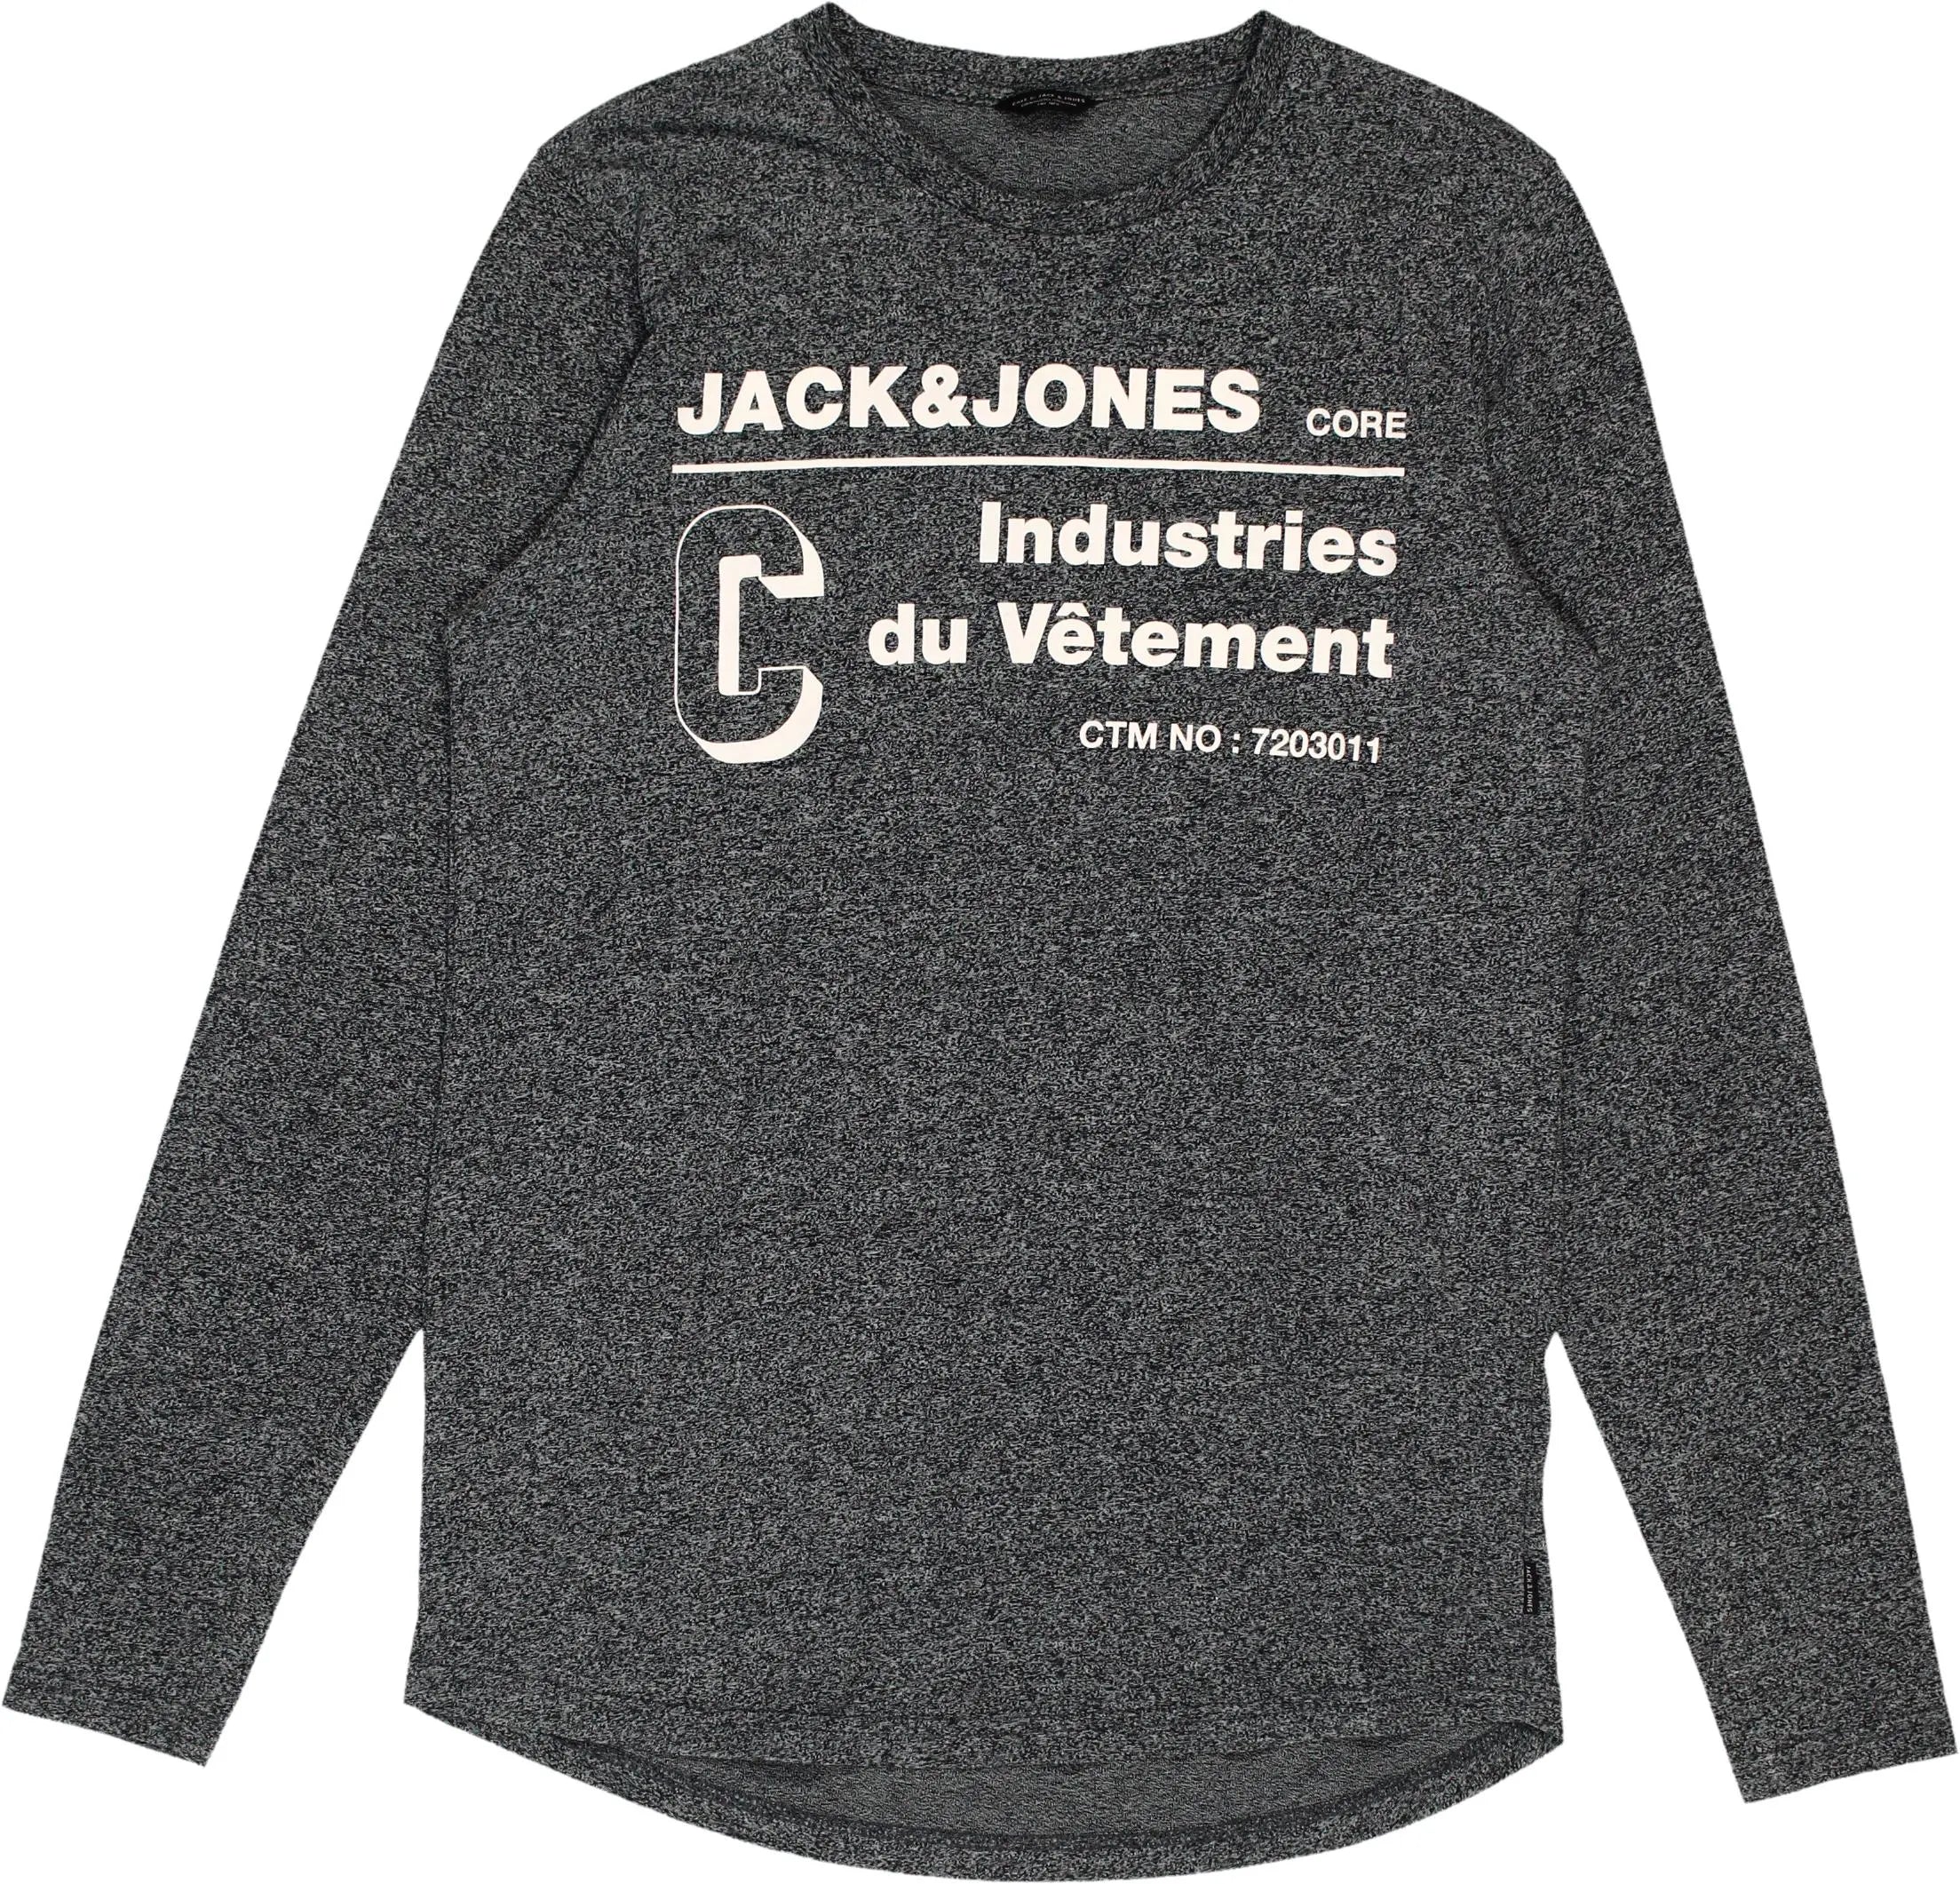 Jack & Jones - Long Sleeve Shirt- ThriftTale.com - Vintage and second handclothing